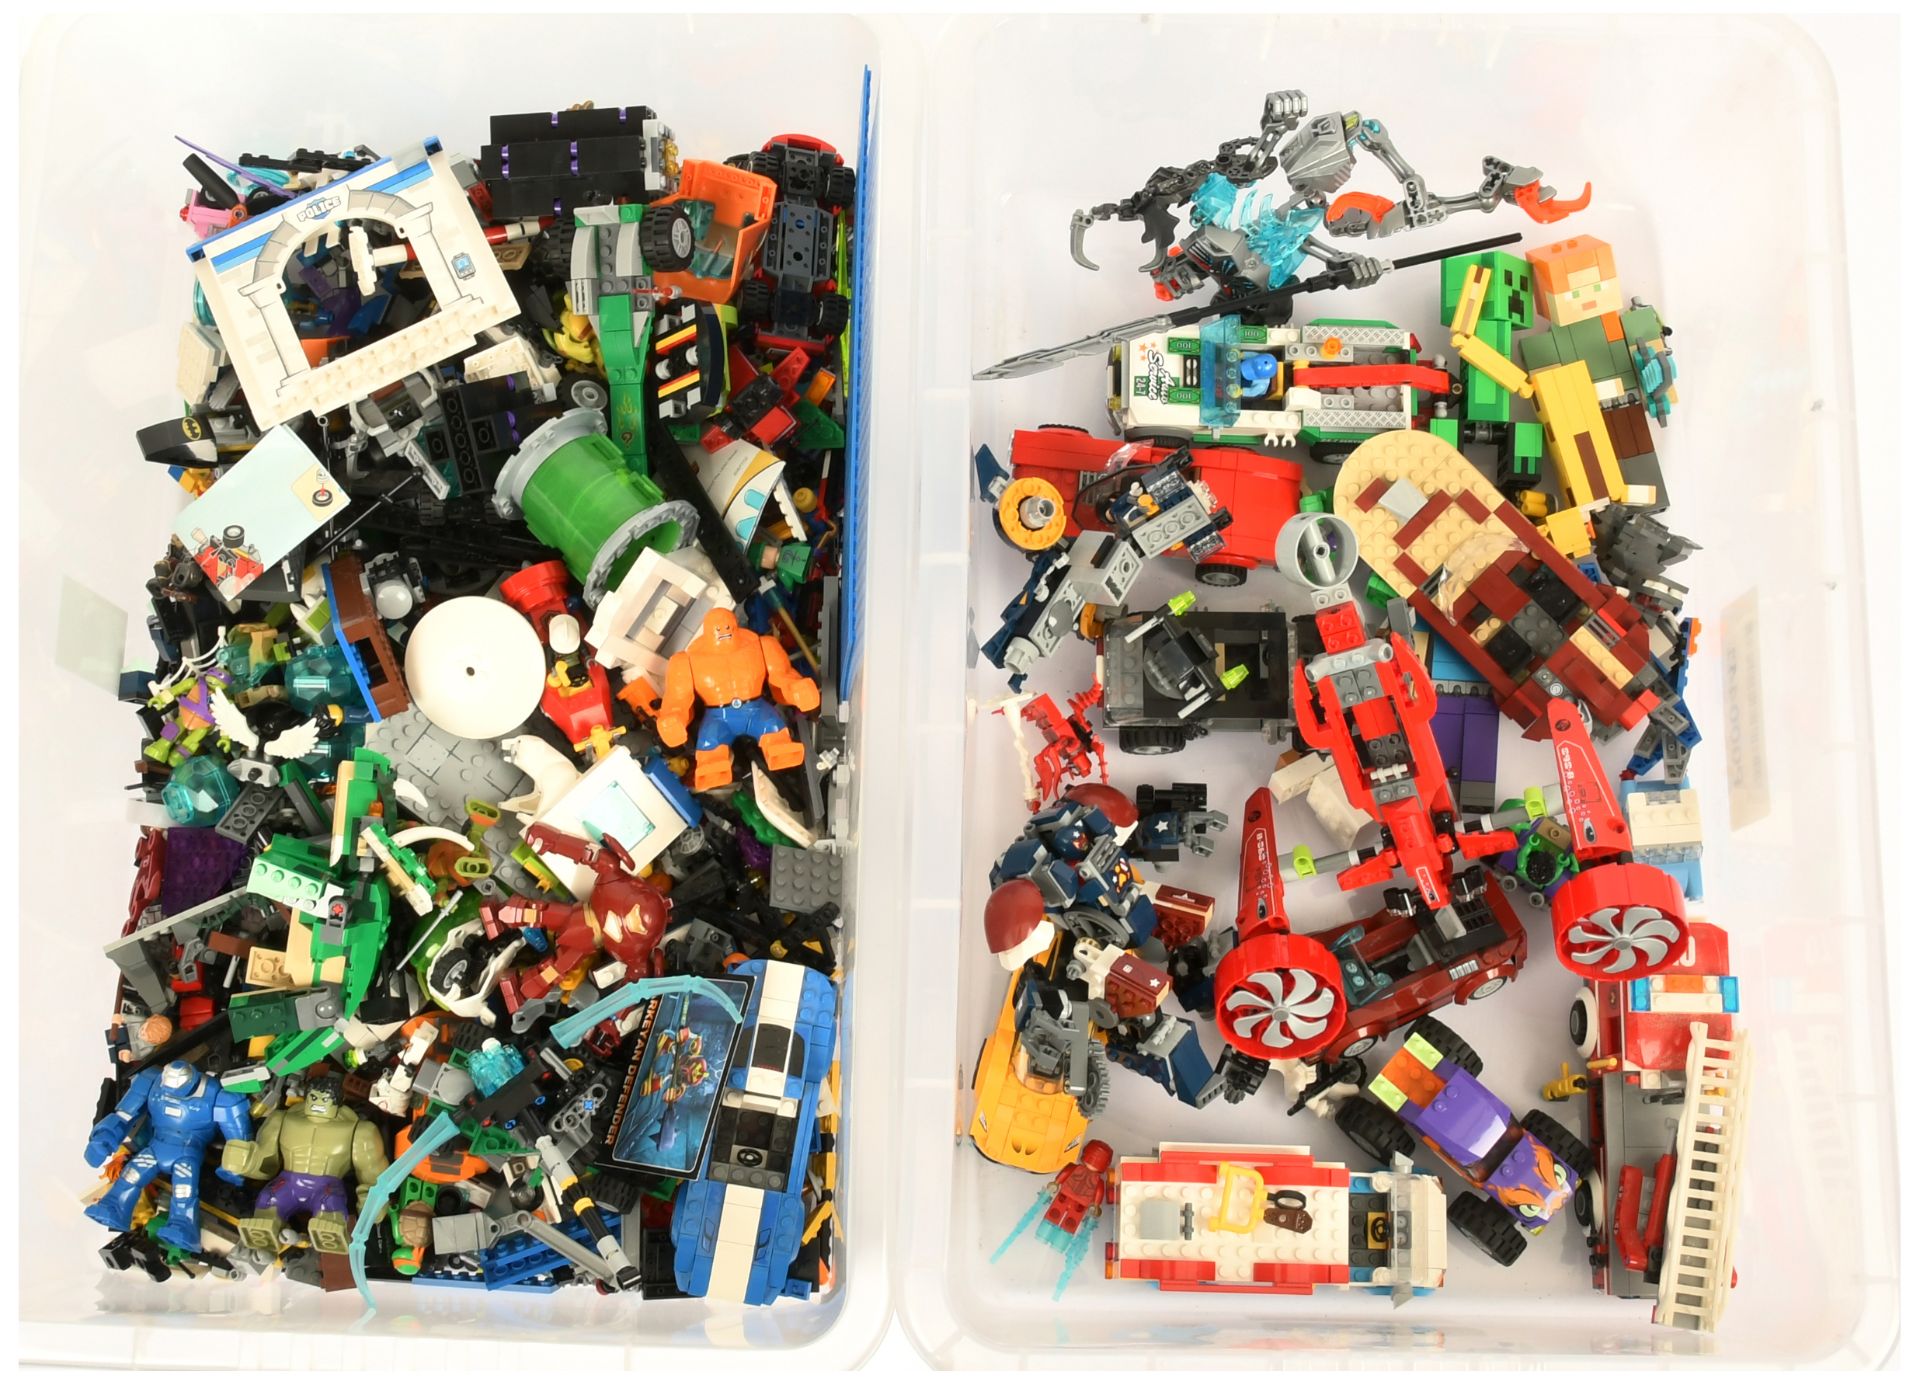 Lego mixed unboxed Quantity of Built models & Minifigures including Super Heroes; The Hulk, Ninja...